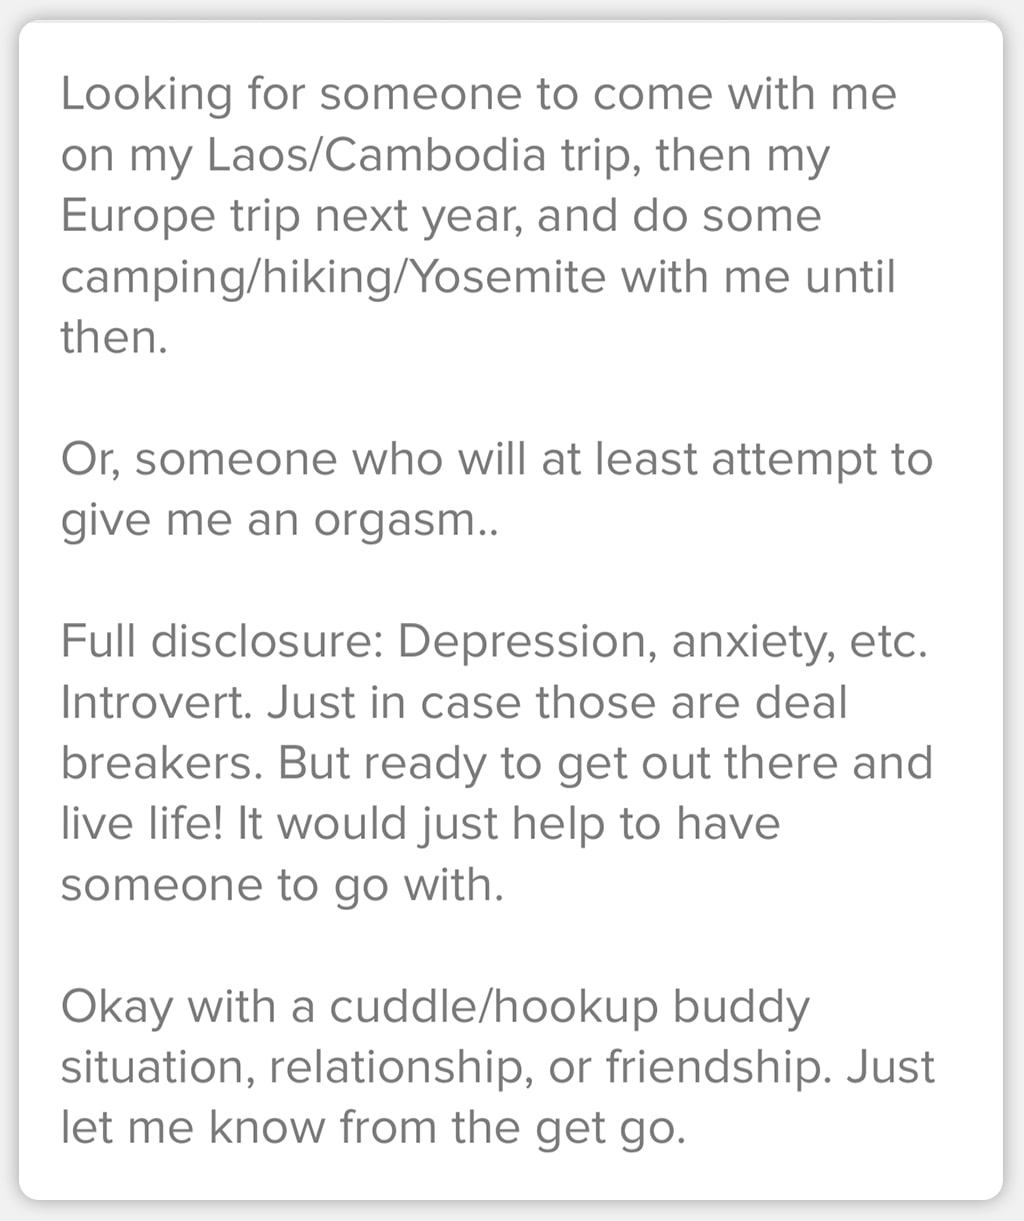 Screenshot Of An Online Dating Profile Description Showing Low Self-Esteem